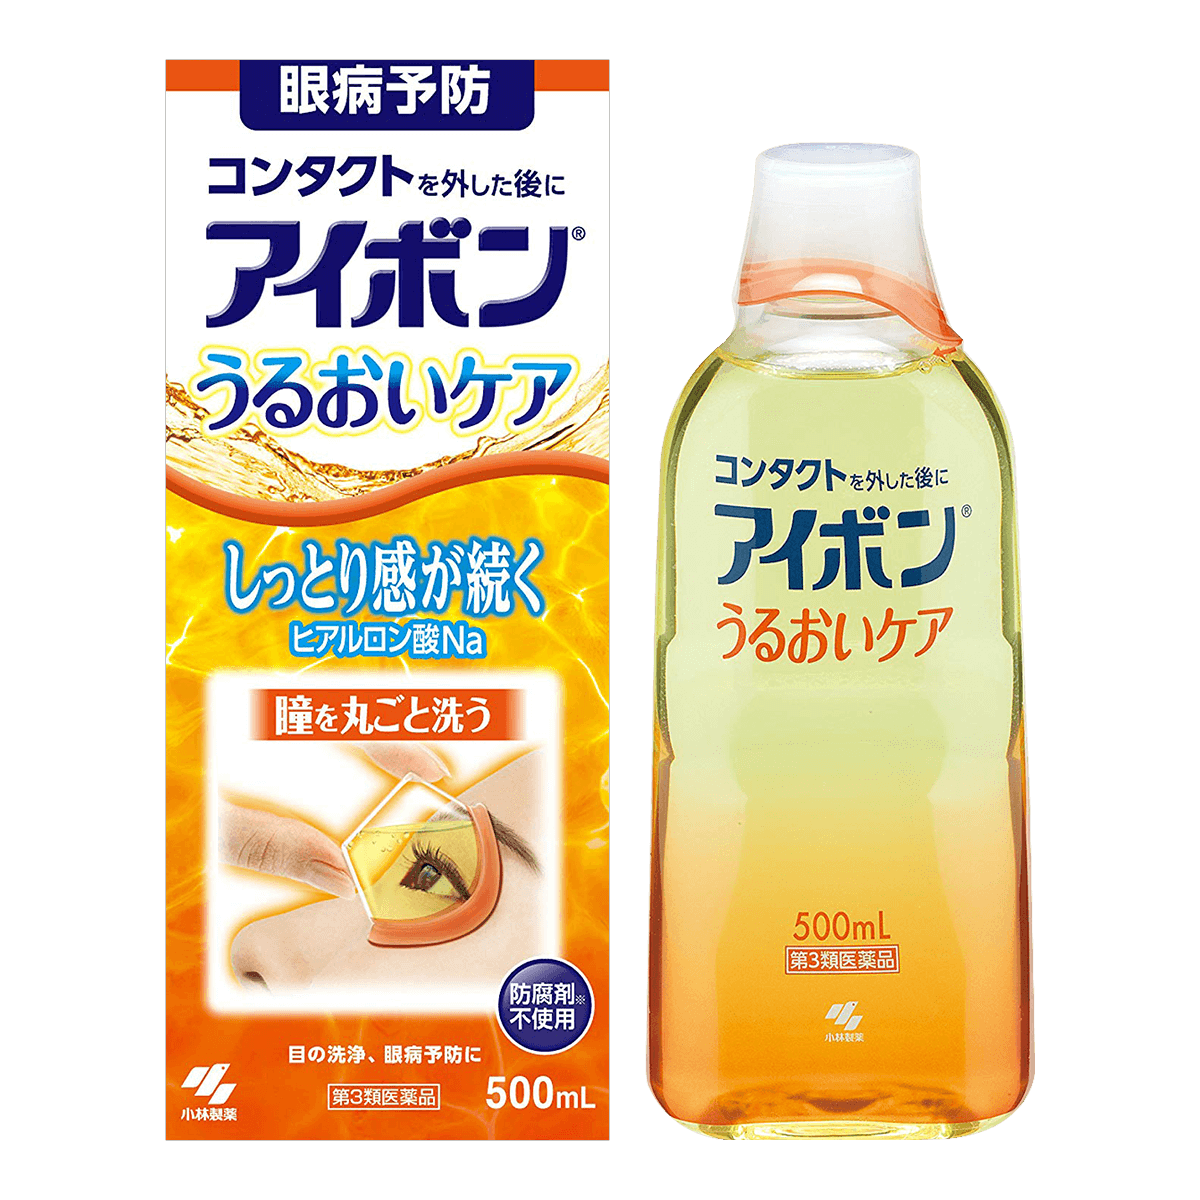 Yamibuy.com:Customer reviews:Eye Wash #Orange Coolness 2~3 500ml